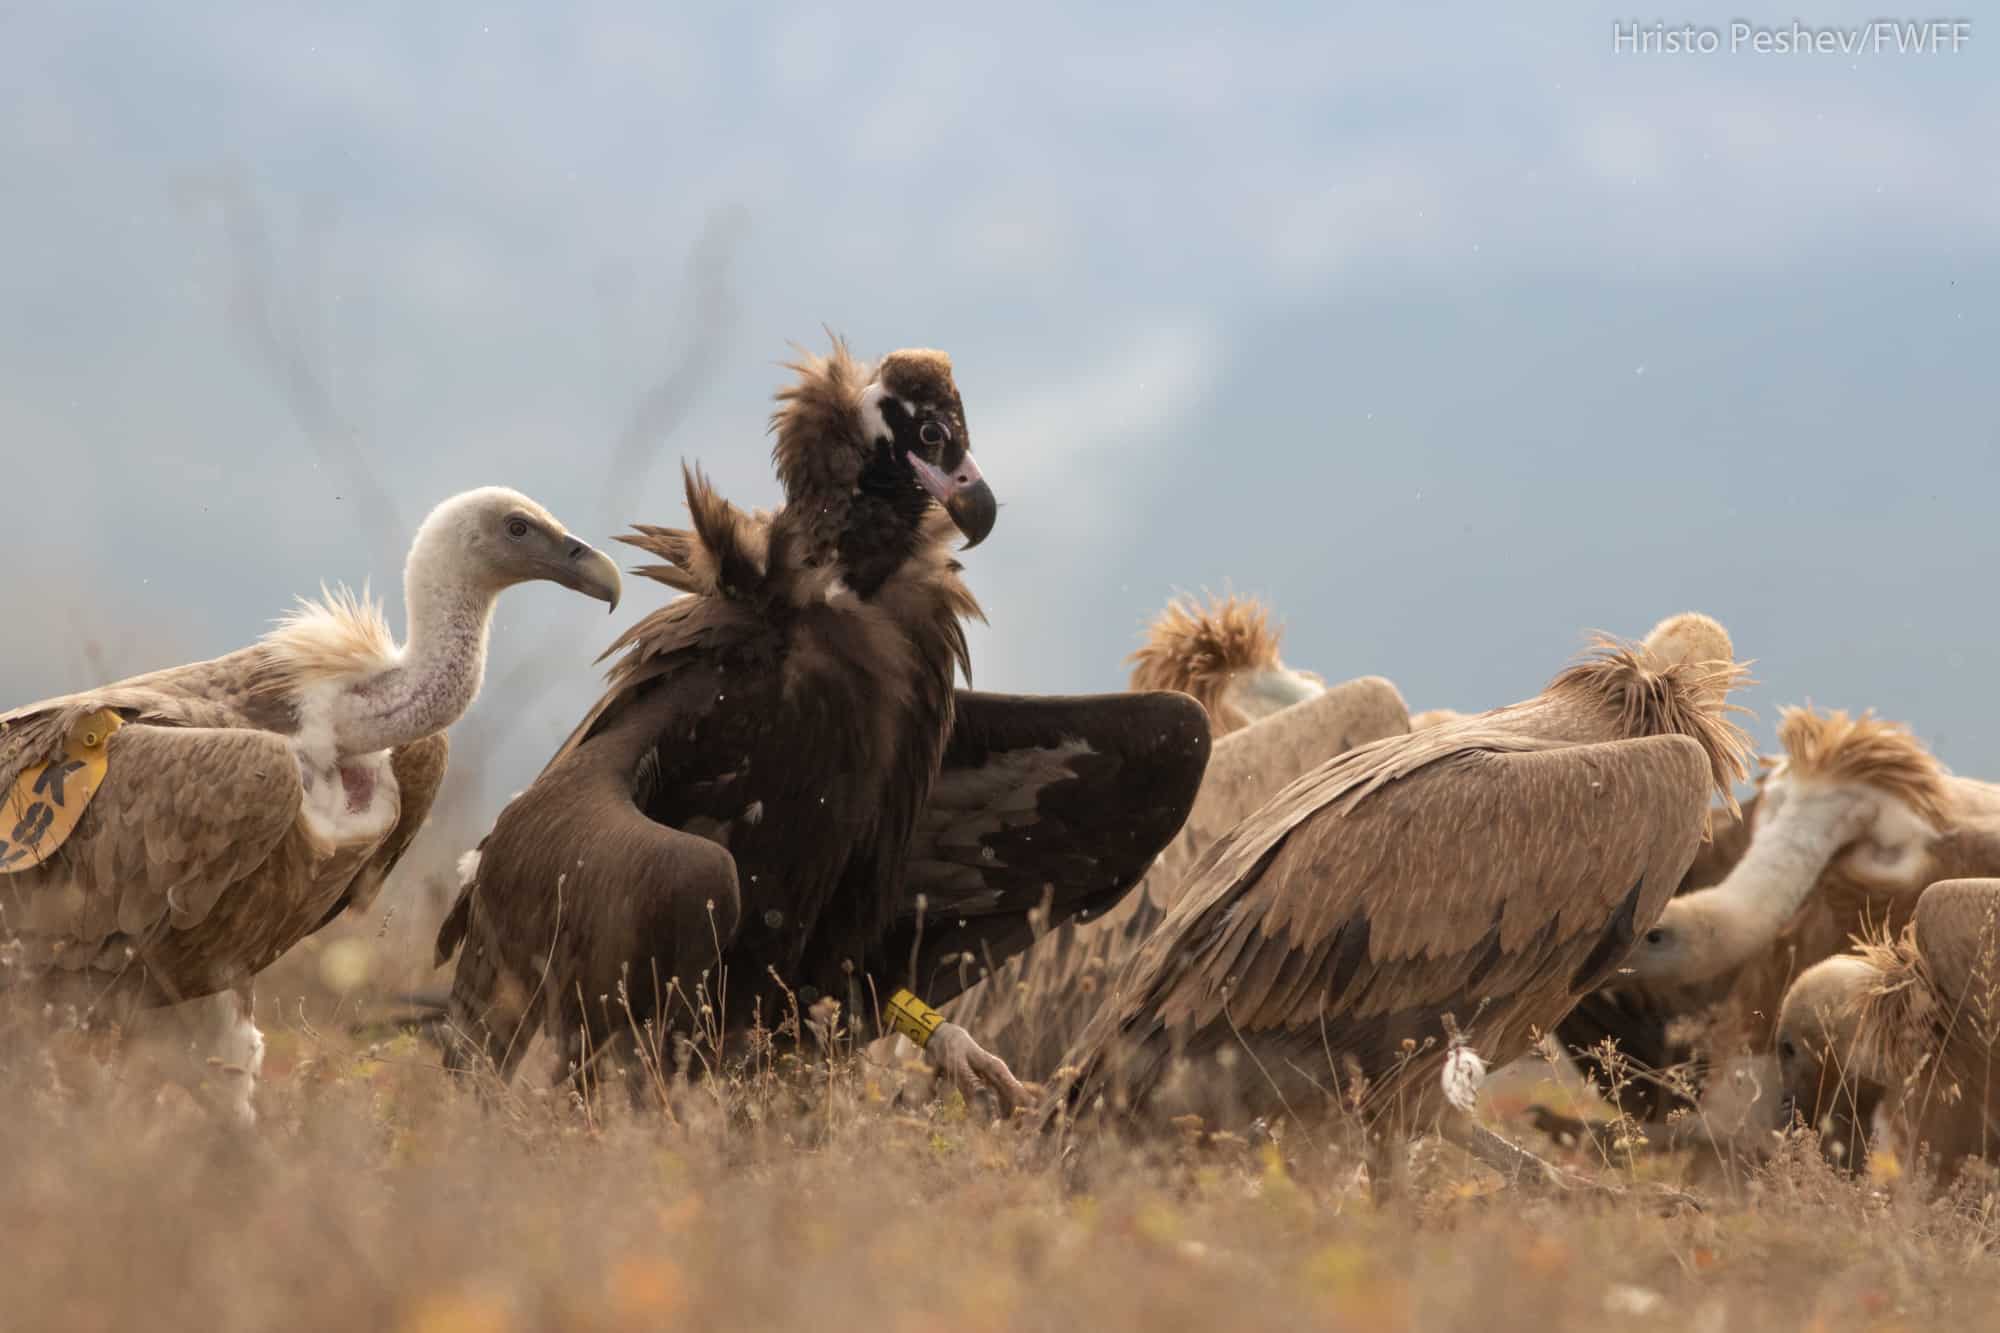 A cinereous vulture stands among griffon vultures.